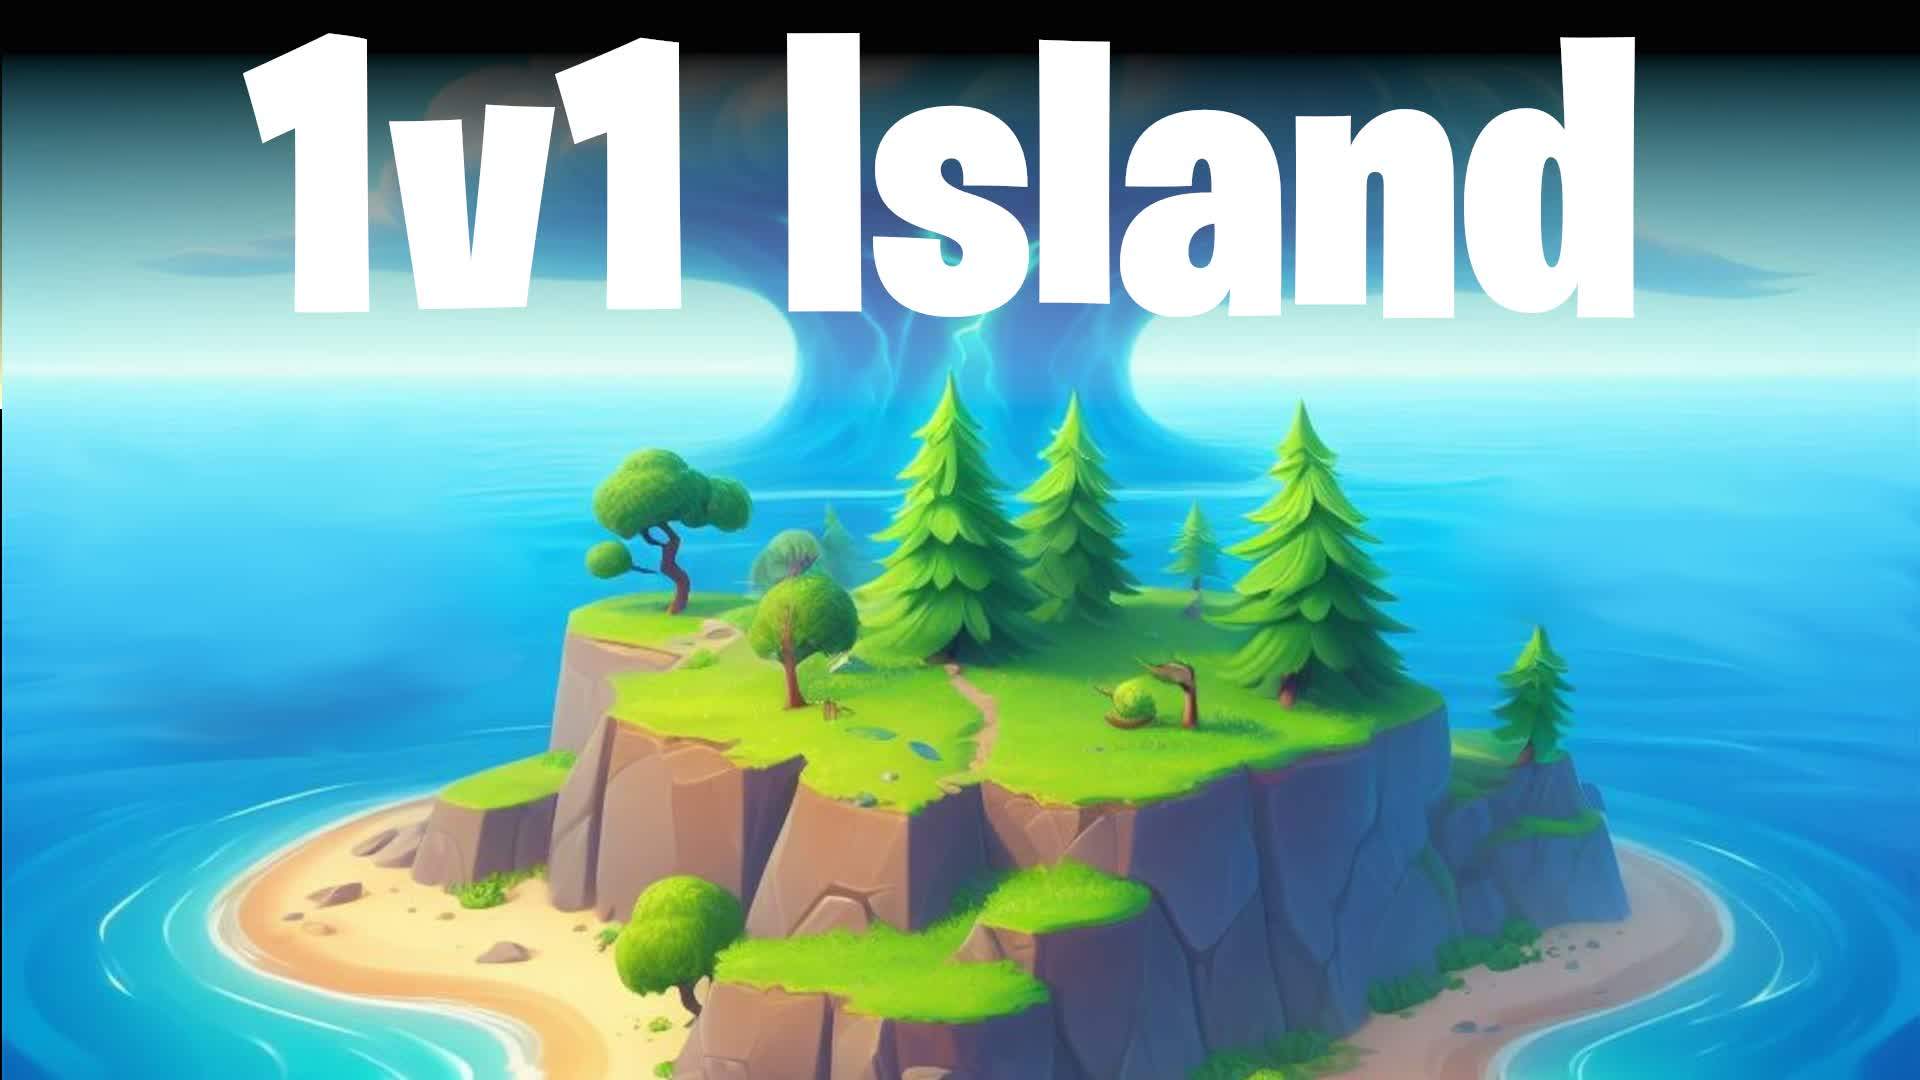 1v1 Island